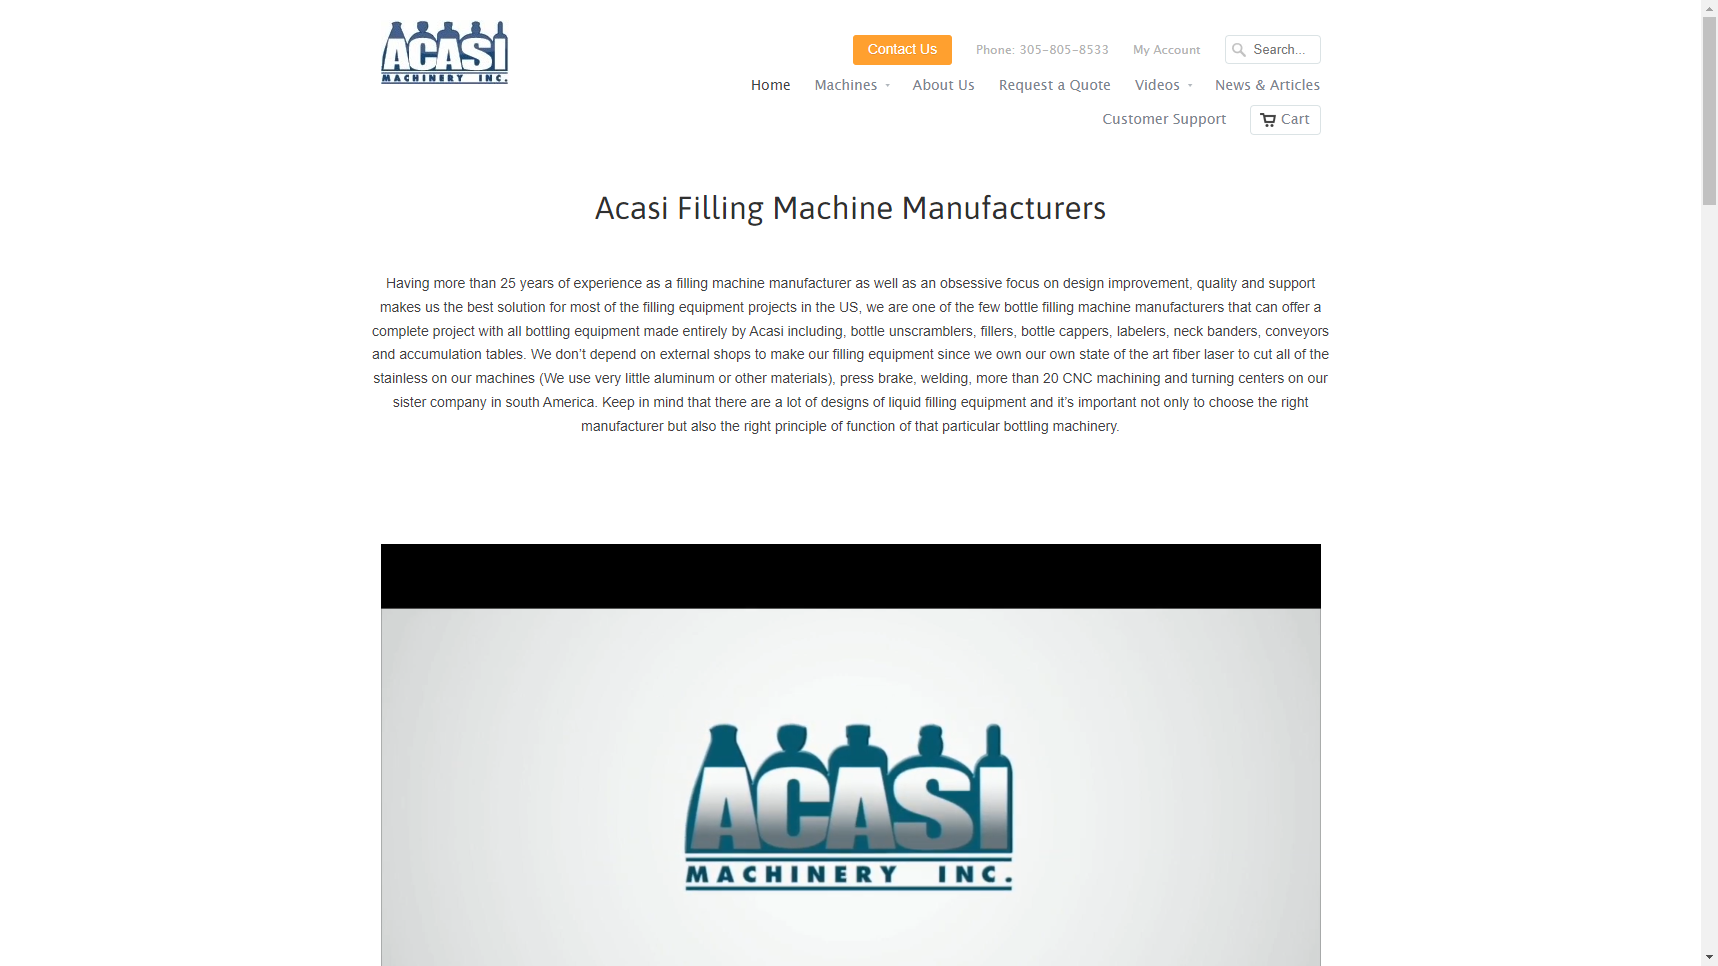 Acasi Machinery - Filling Machine Manufacturer